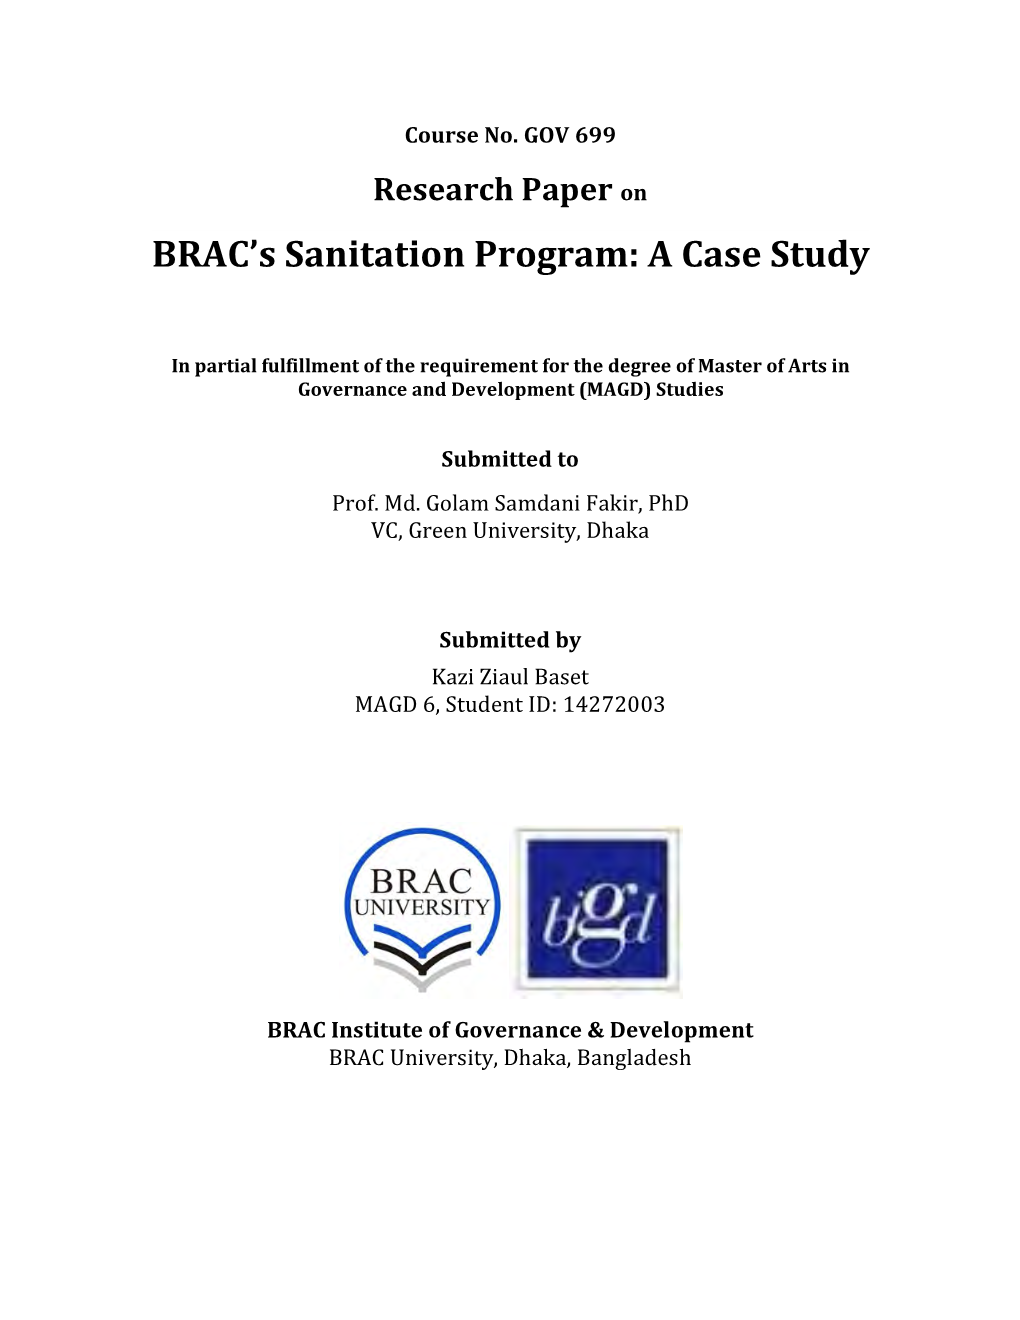 BRAC's Sanitation Program: a Case Study